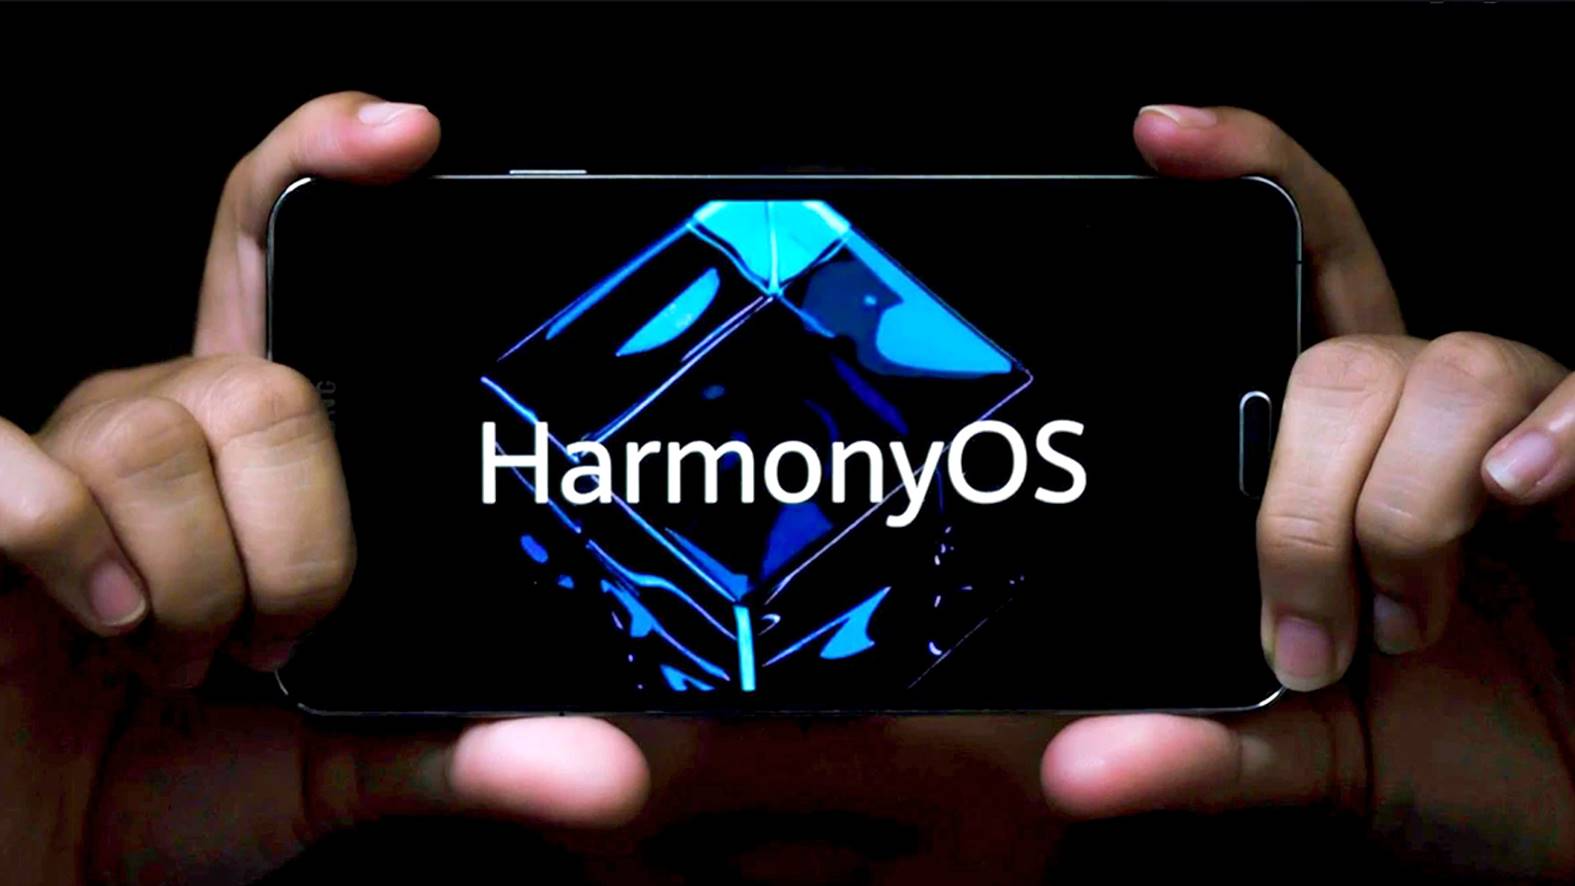 Historic achievement - HarmonyOS installed on 150 million devices